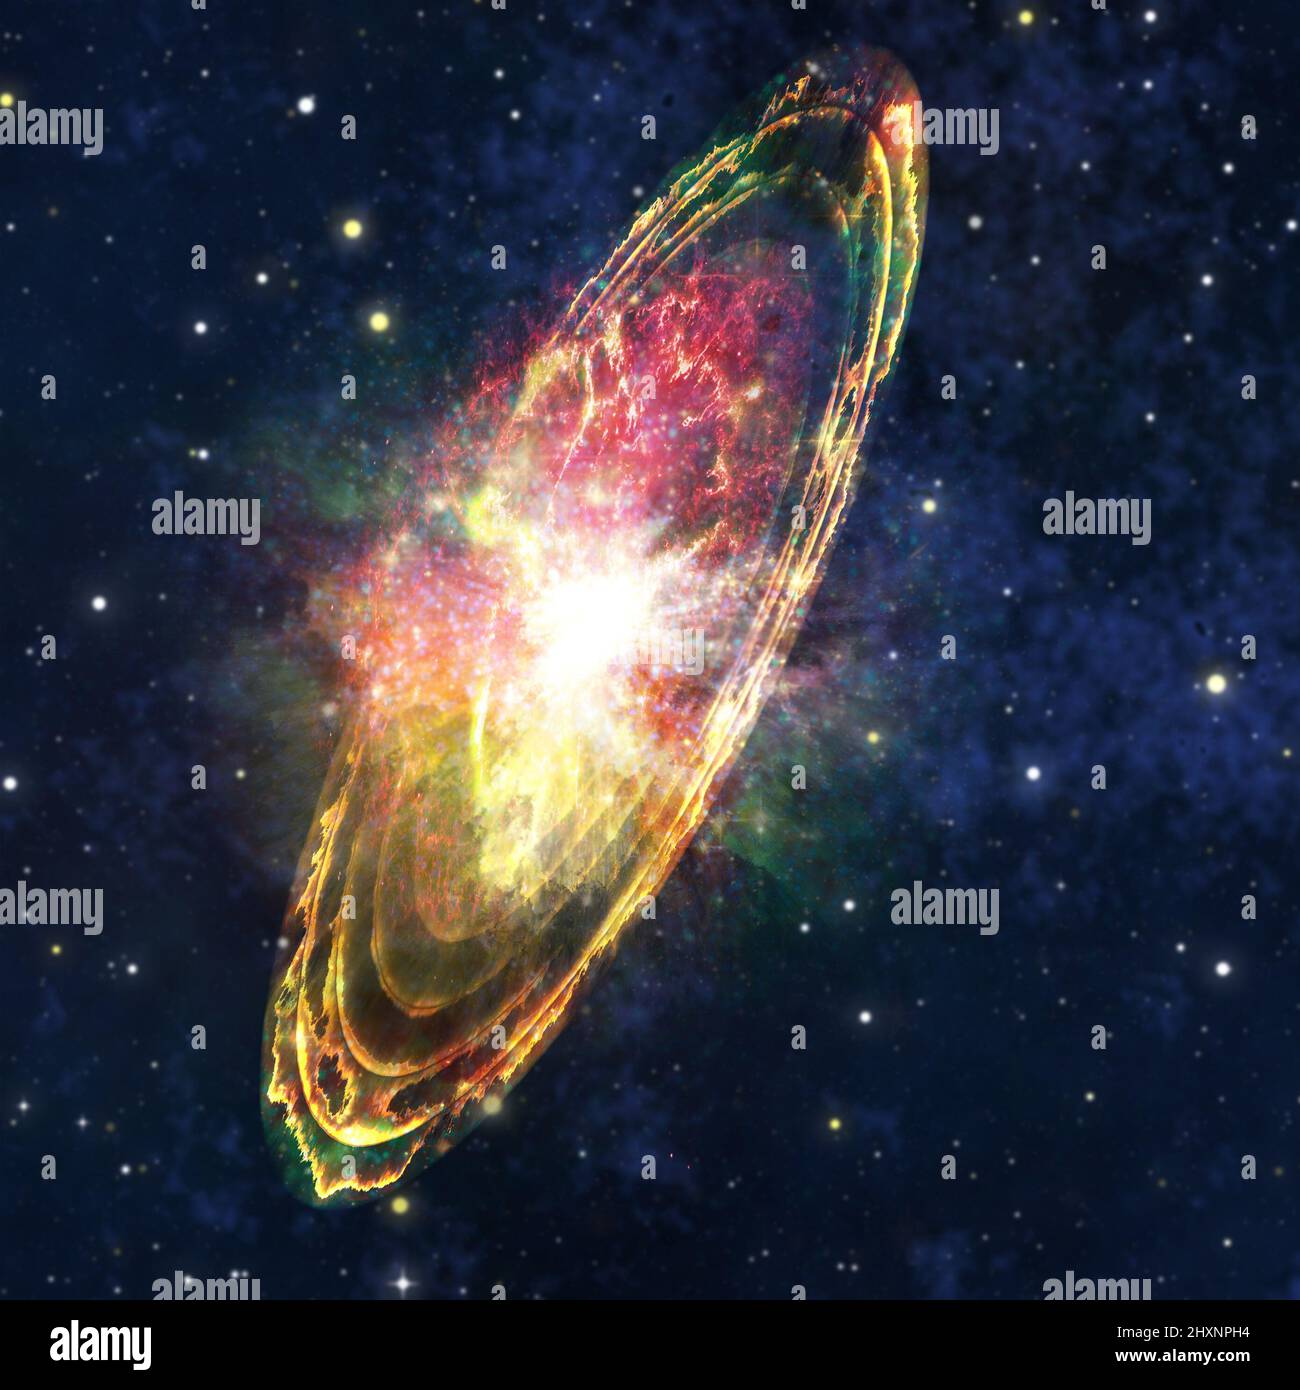 illustration for a supernova star explosion Stock Photo